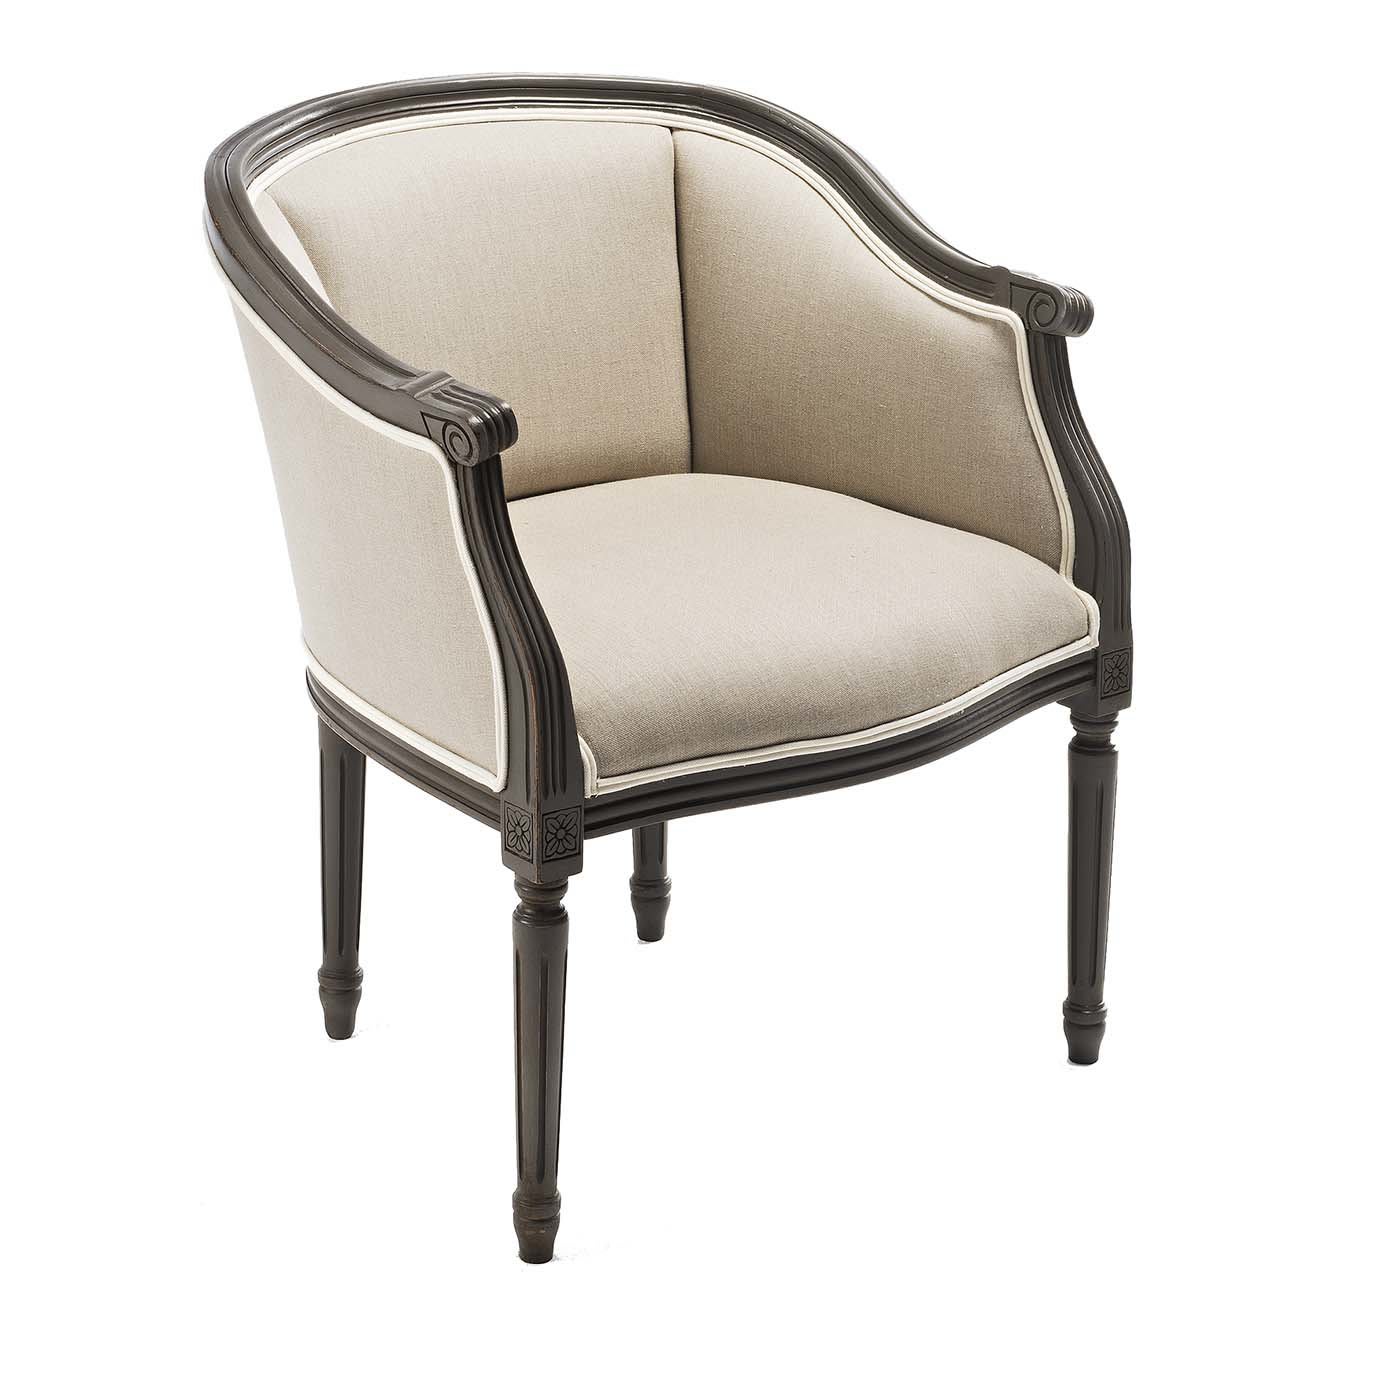 Pozzetto Chair - Buying & Design